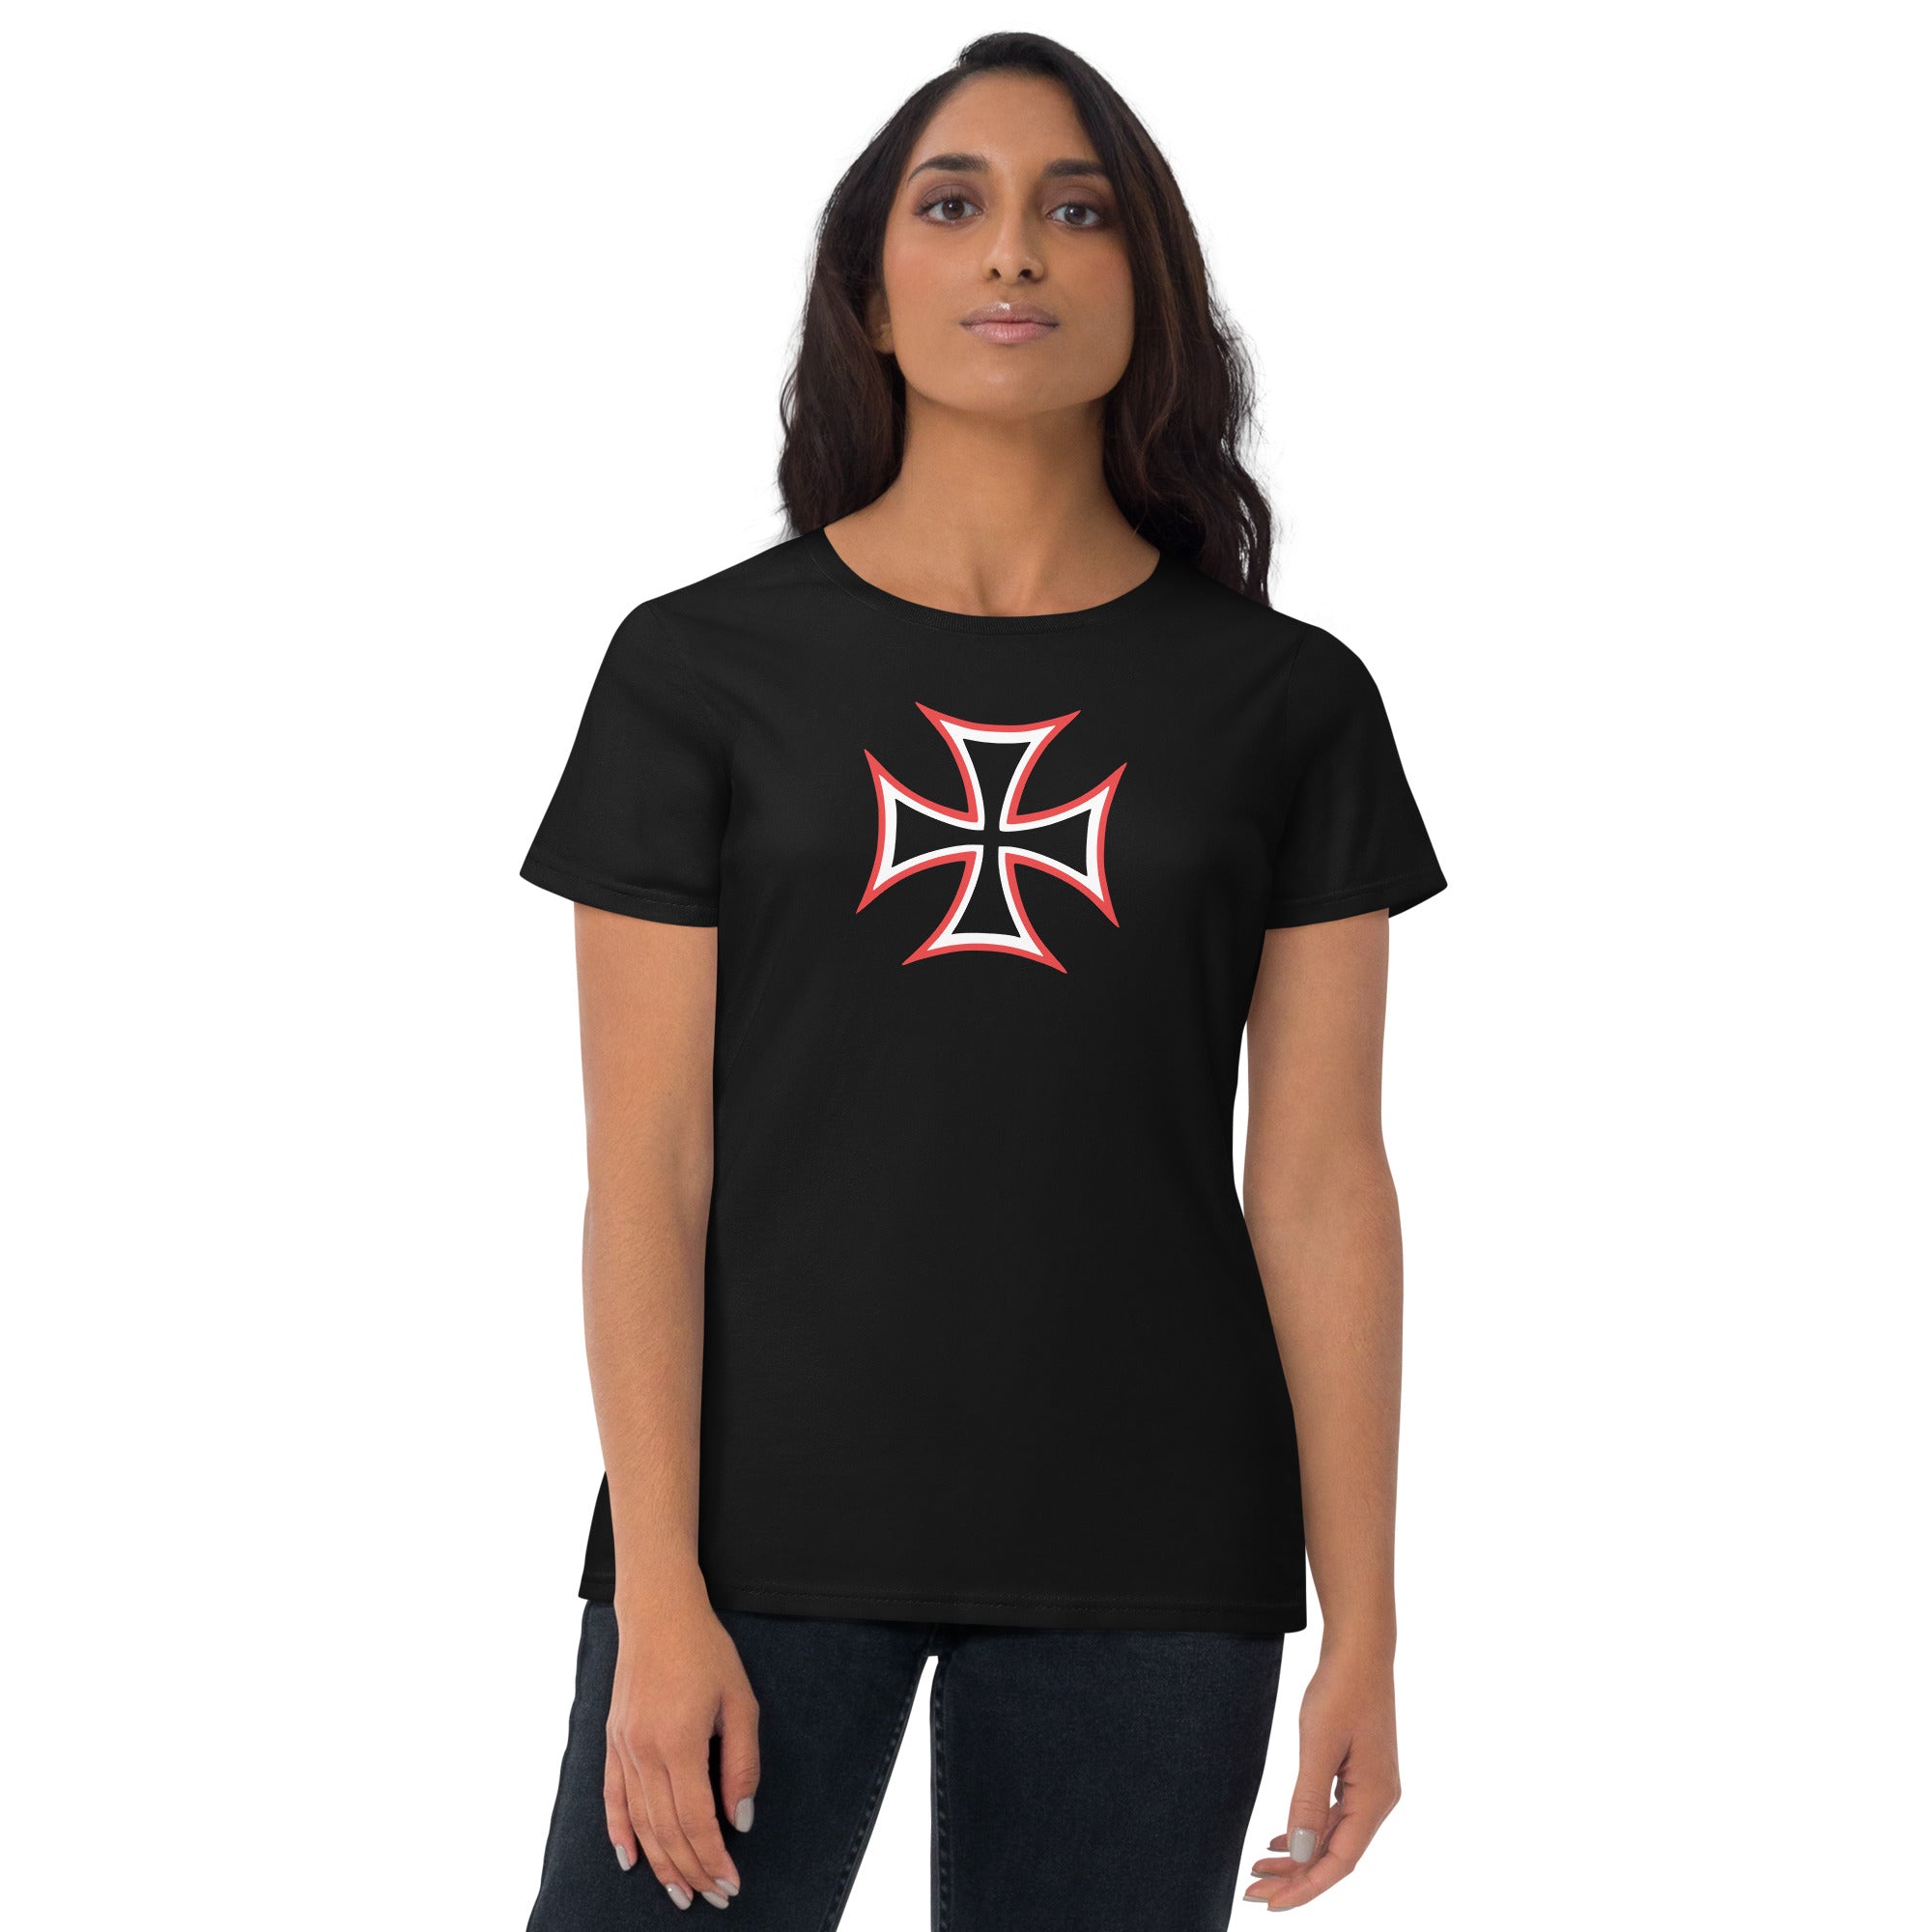 Red and White Occult Biker Cross Symbol Women's Short Sleeve Babydoll T-shirt